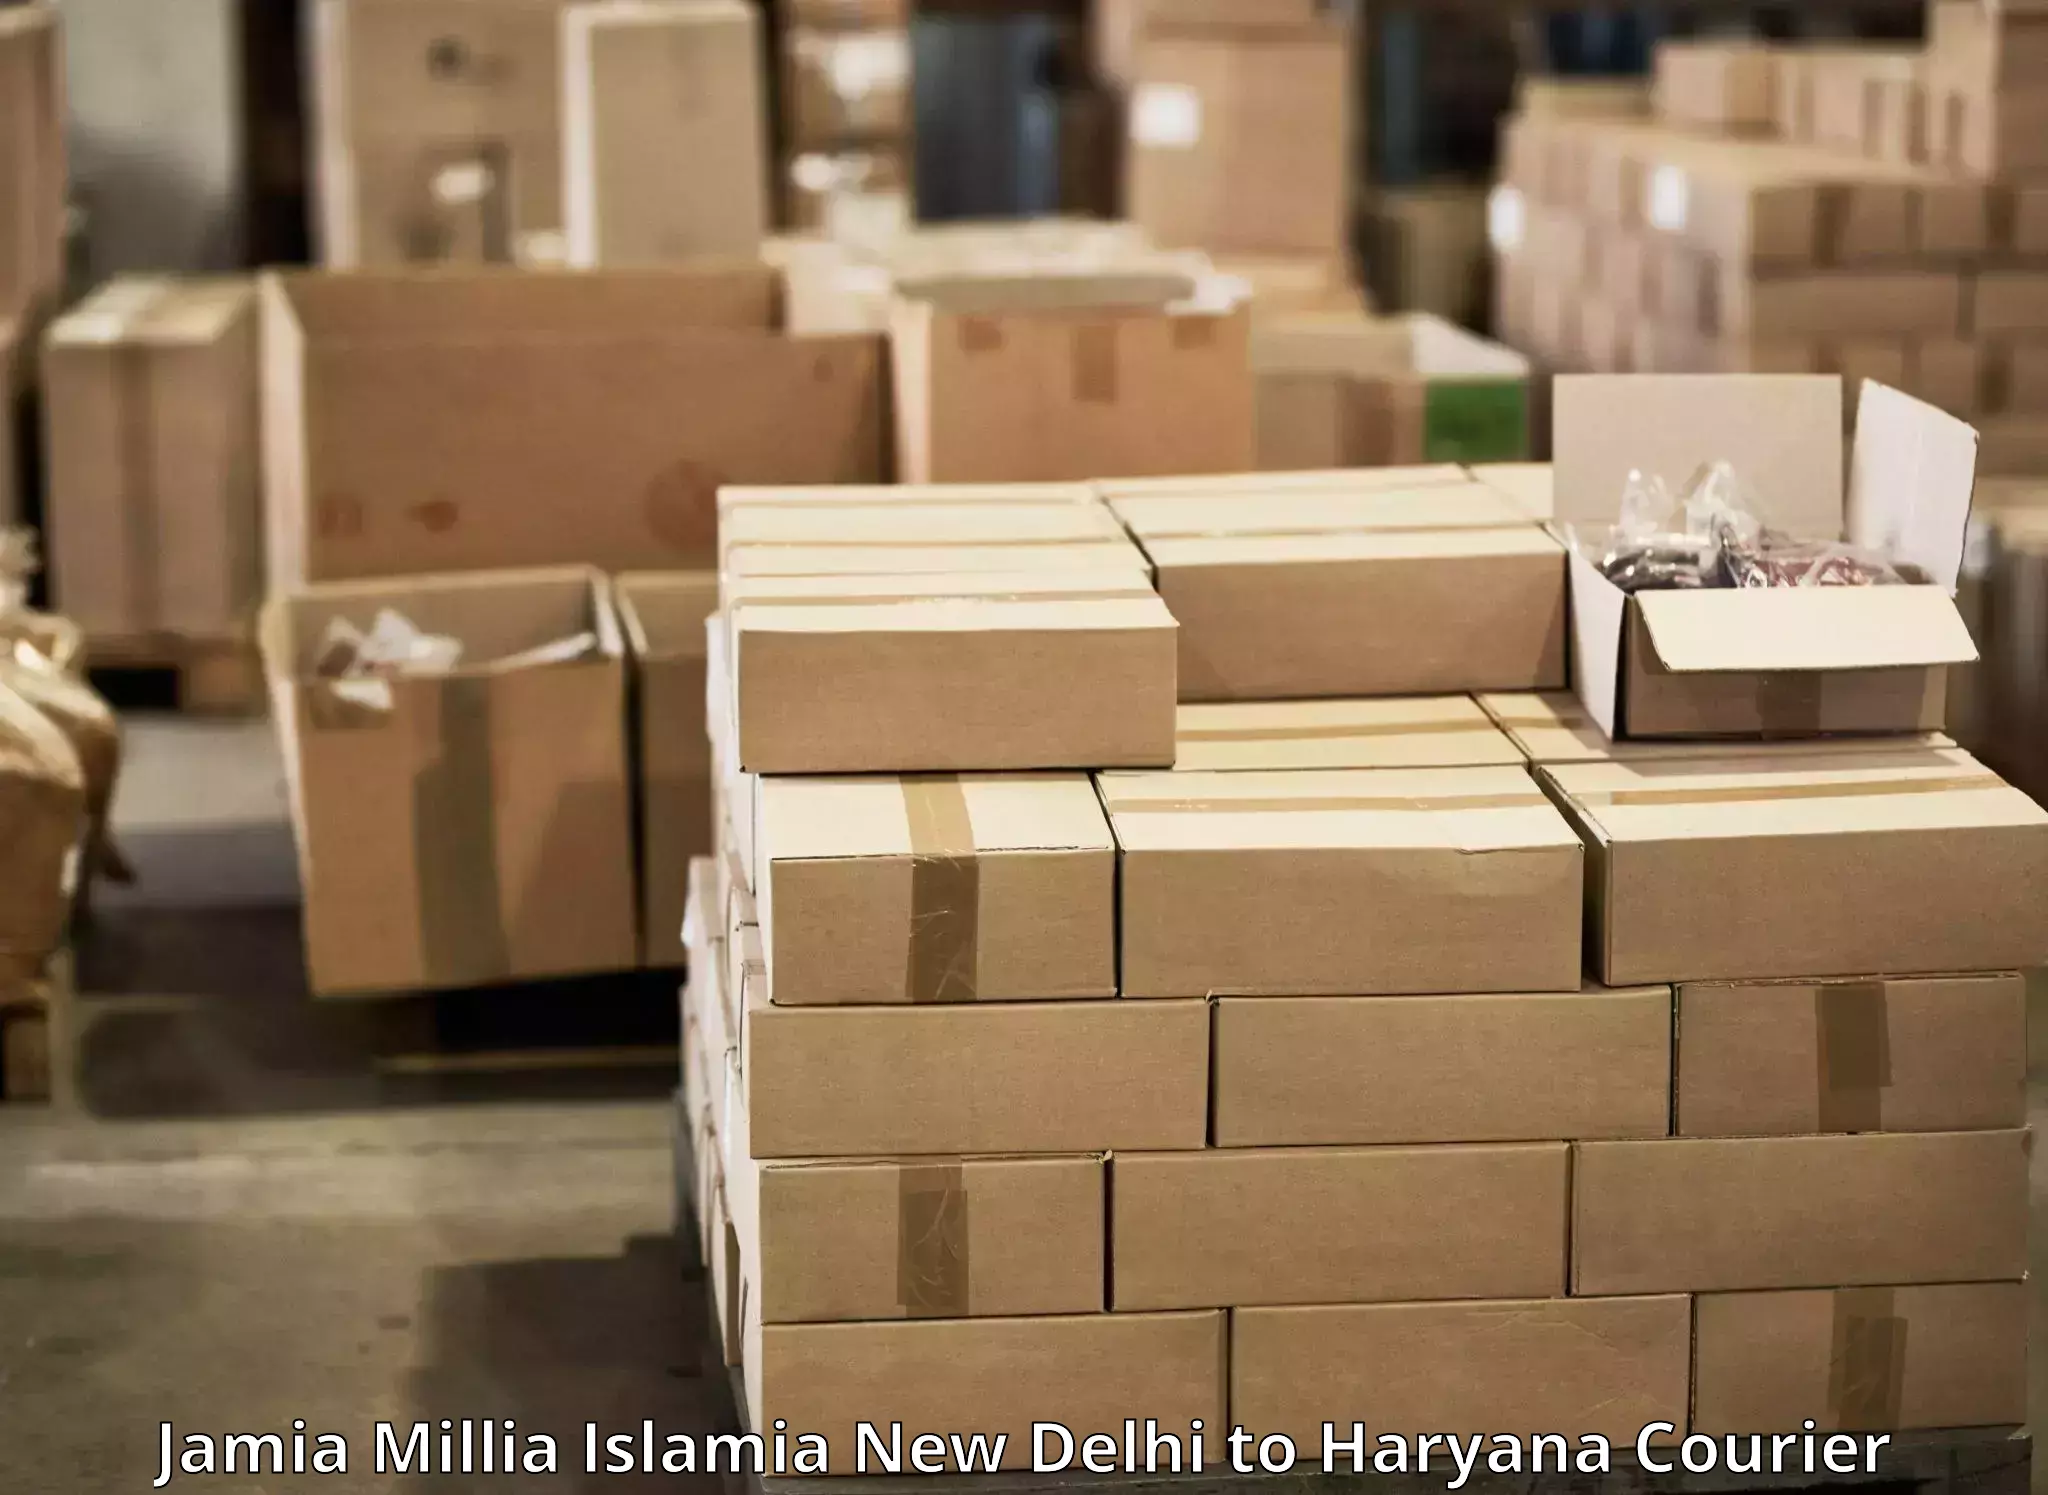 Express delivery network Jamia Millia Islamia New Delhi to Haryana